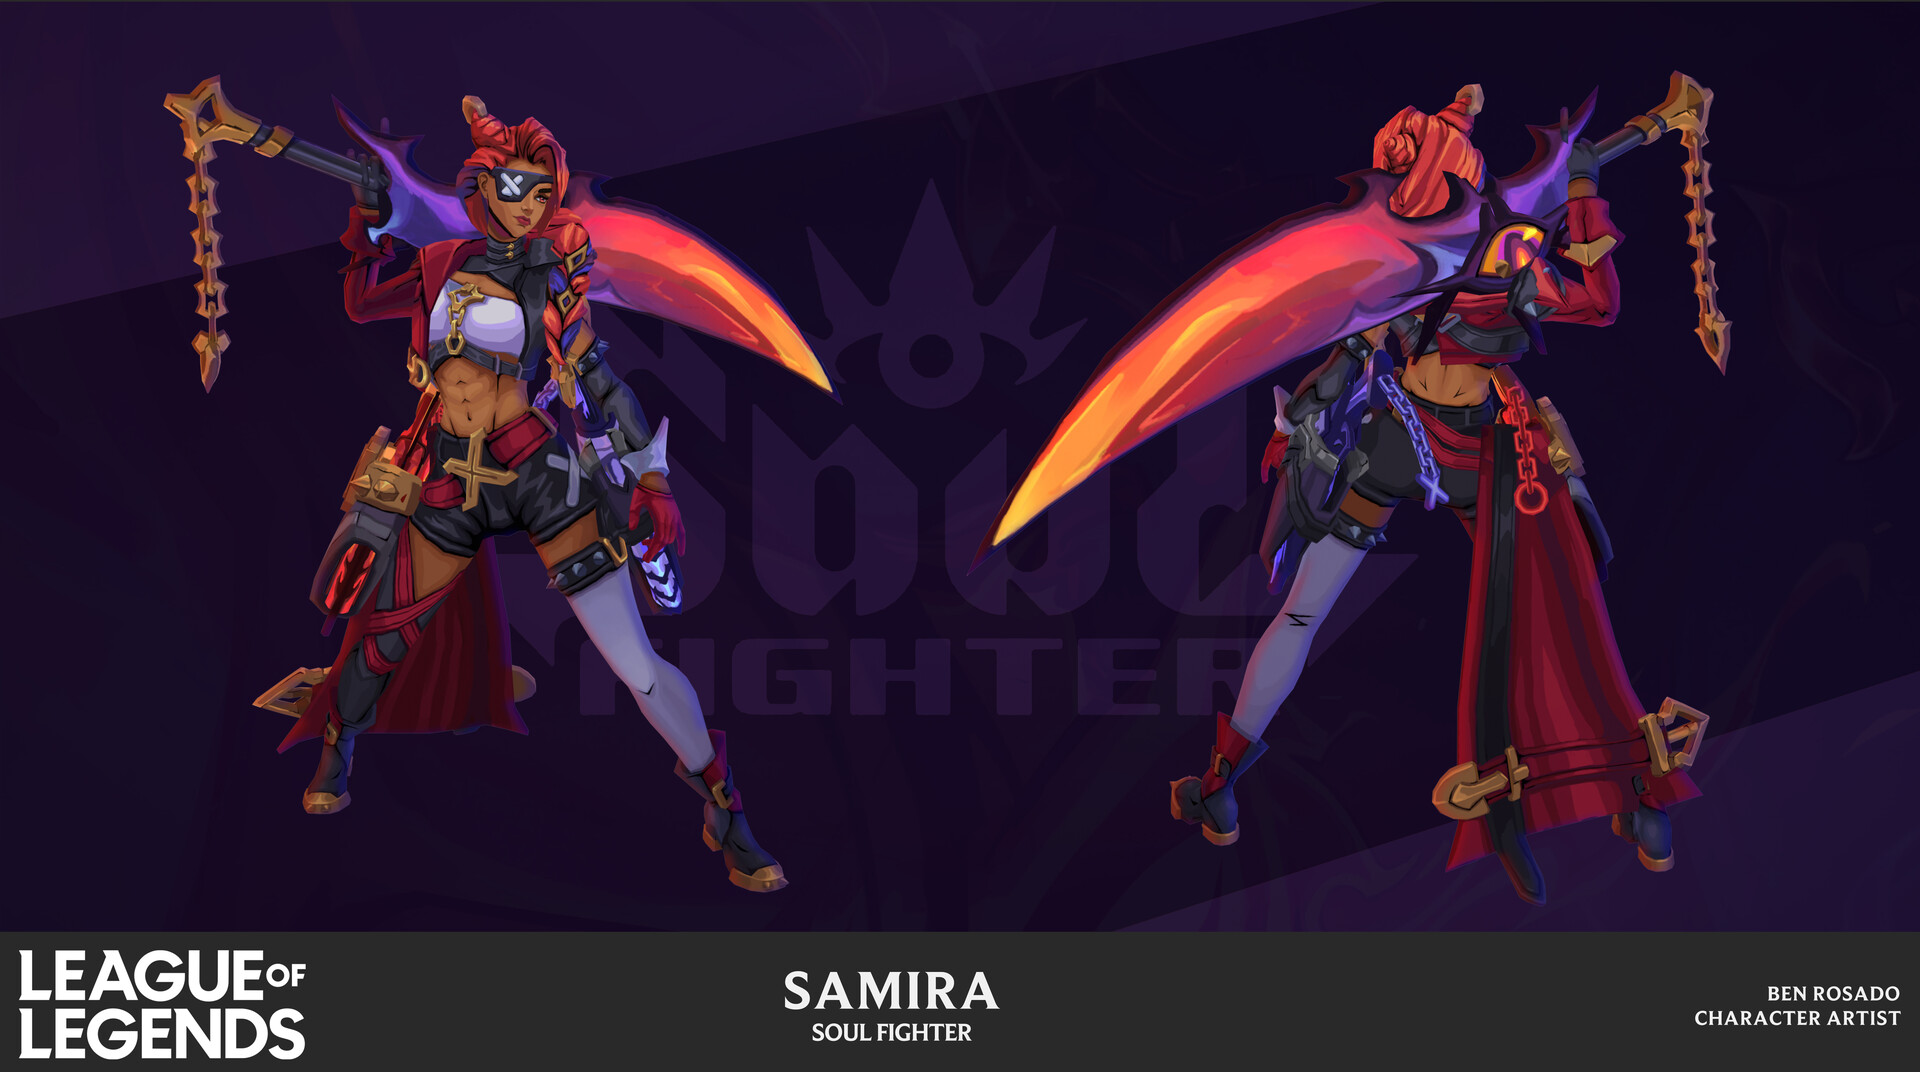 League of Legends LOL Soul Fighter Samira Cosplay Costume